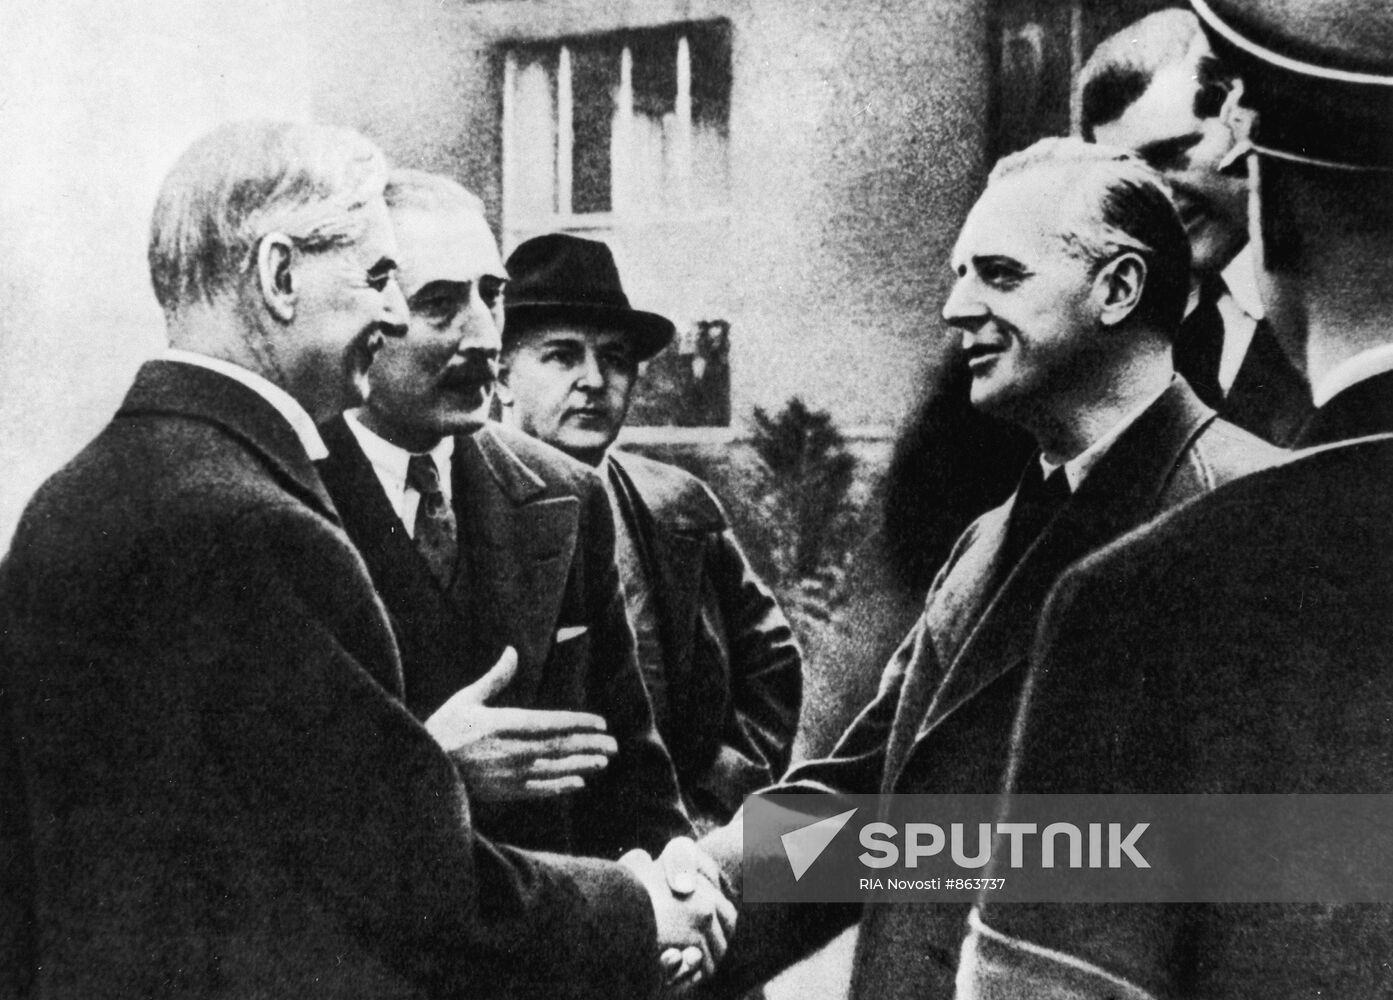 The 1938 Munich agreement